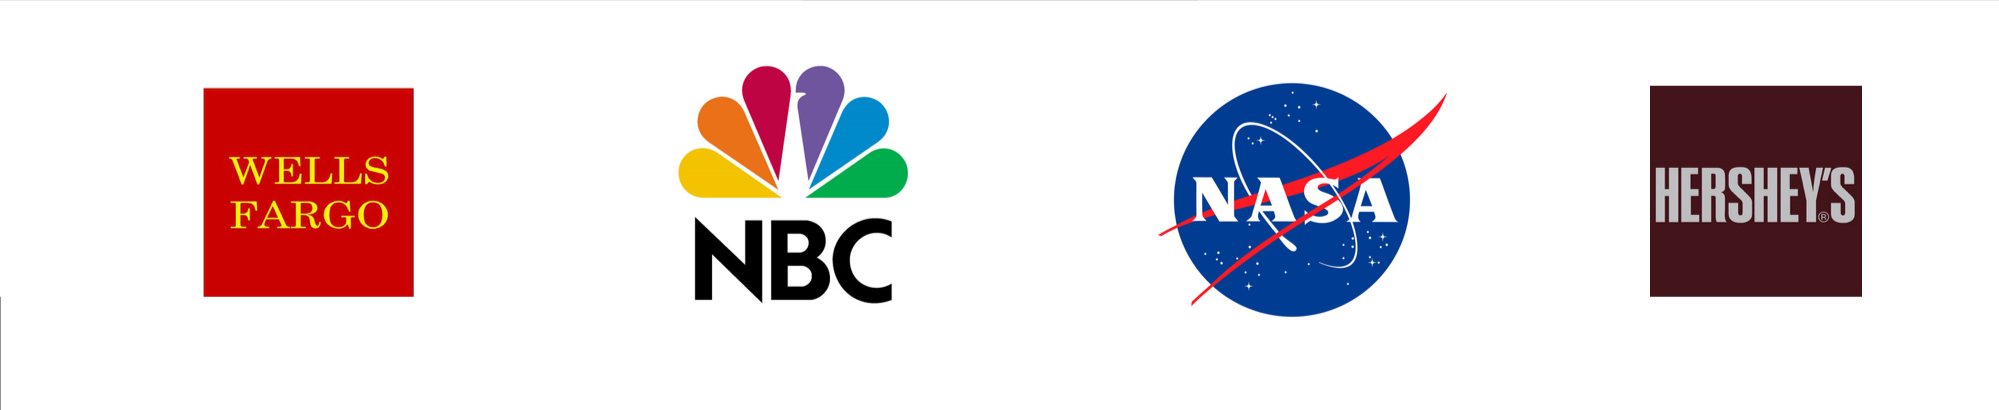 Wells Fargo, NBC, Nasa and Hershey's logo